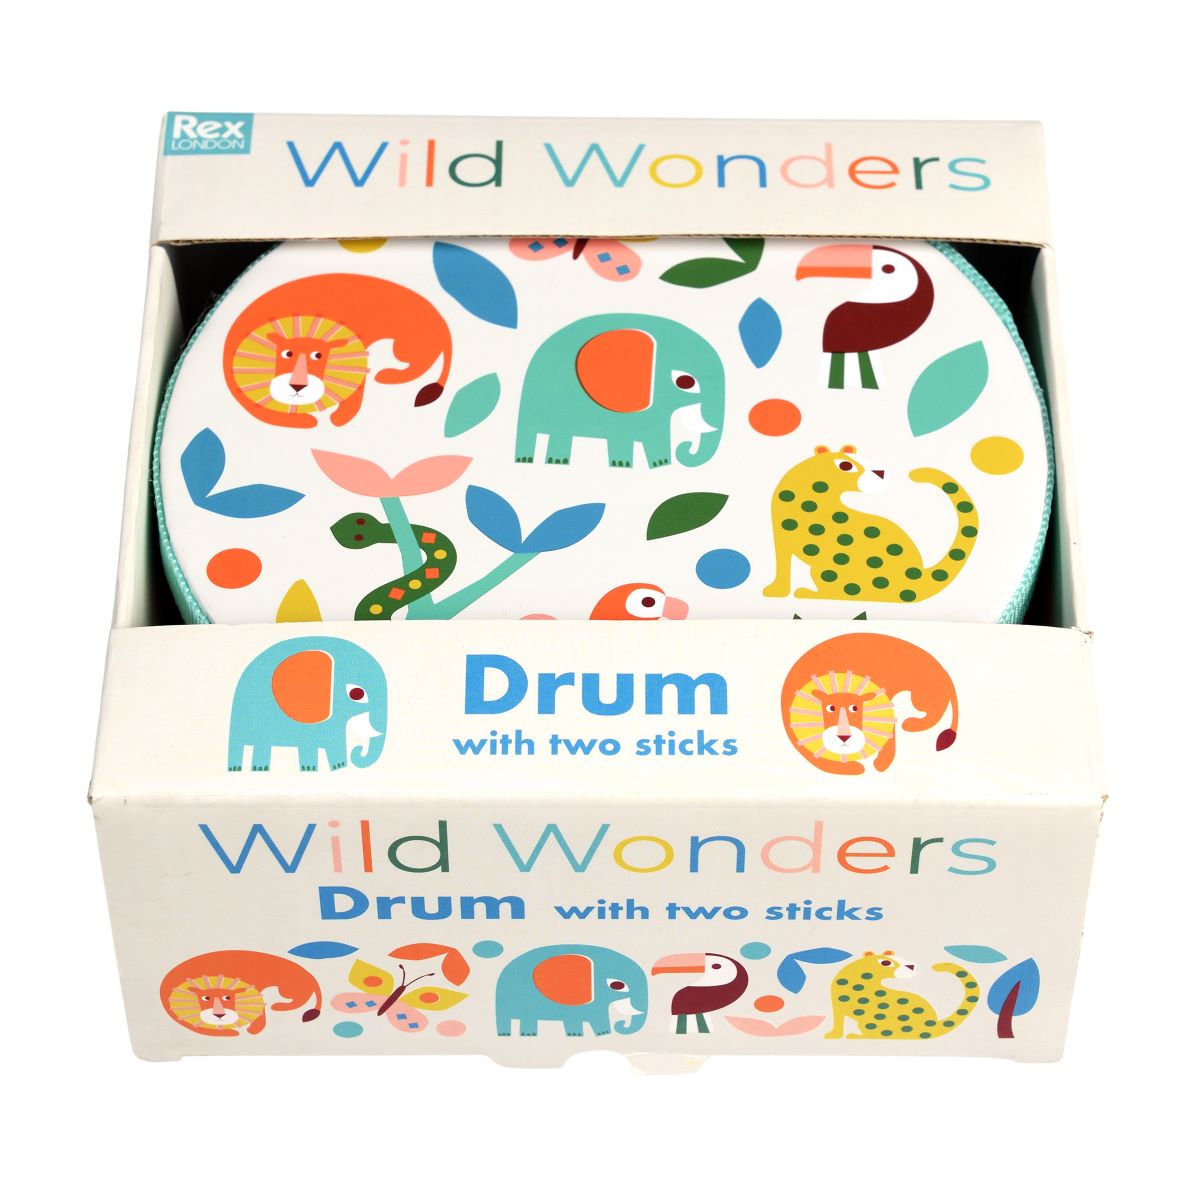 Drum with drumsticks - Wild Wonders